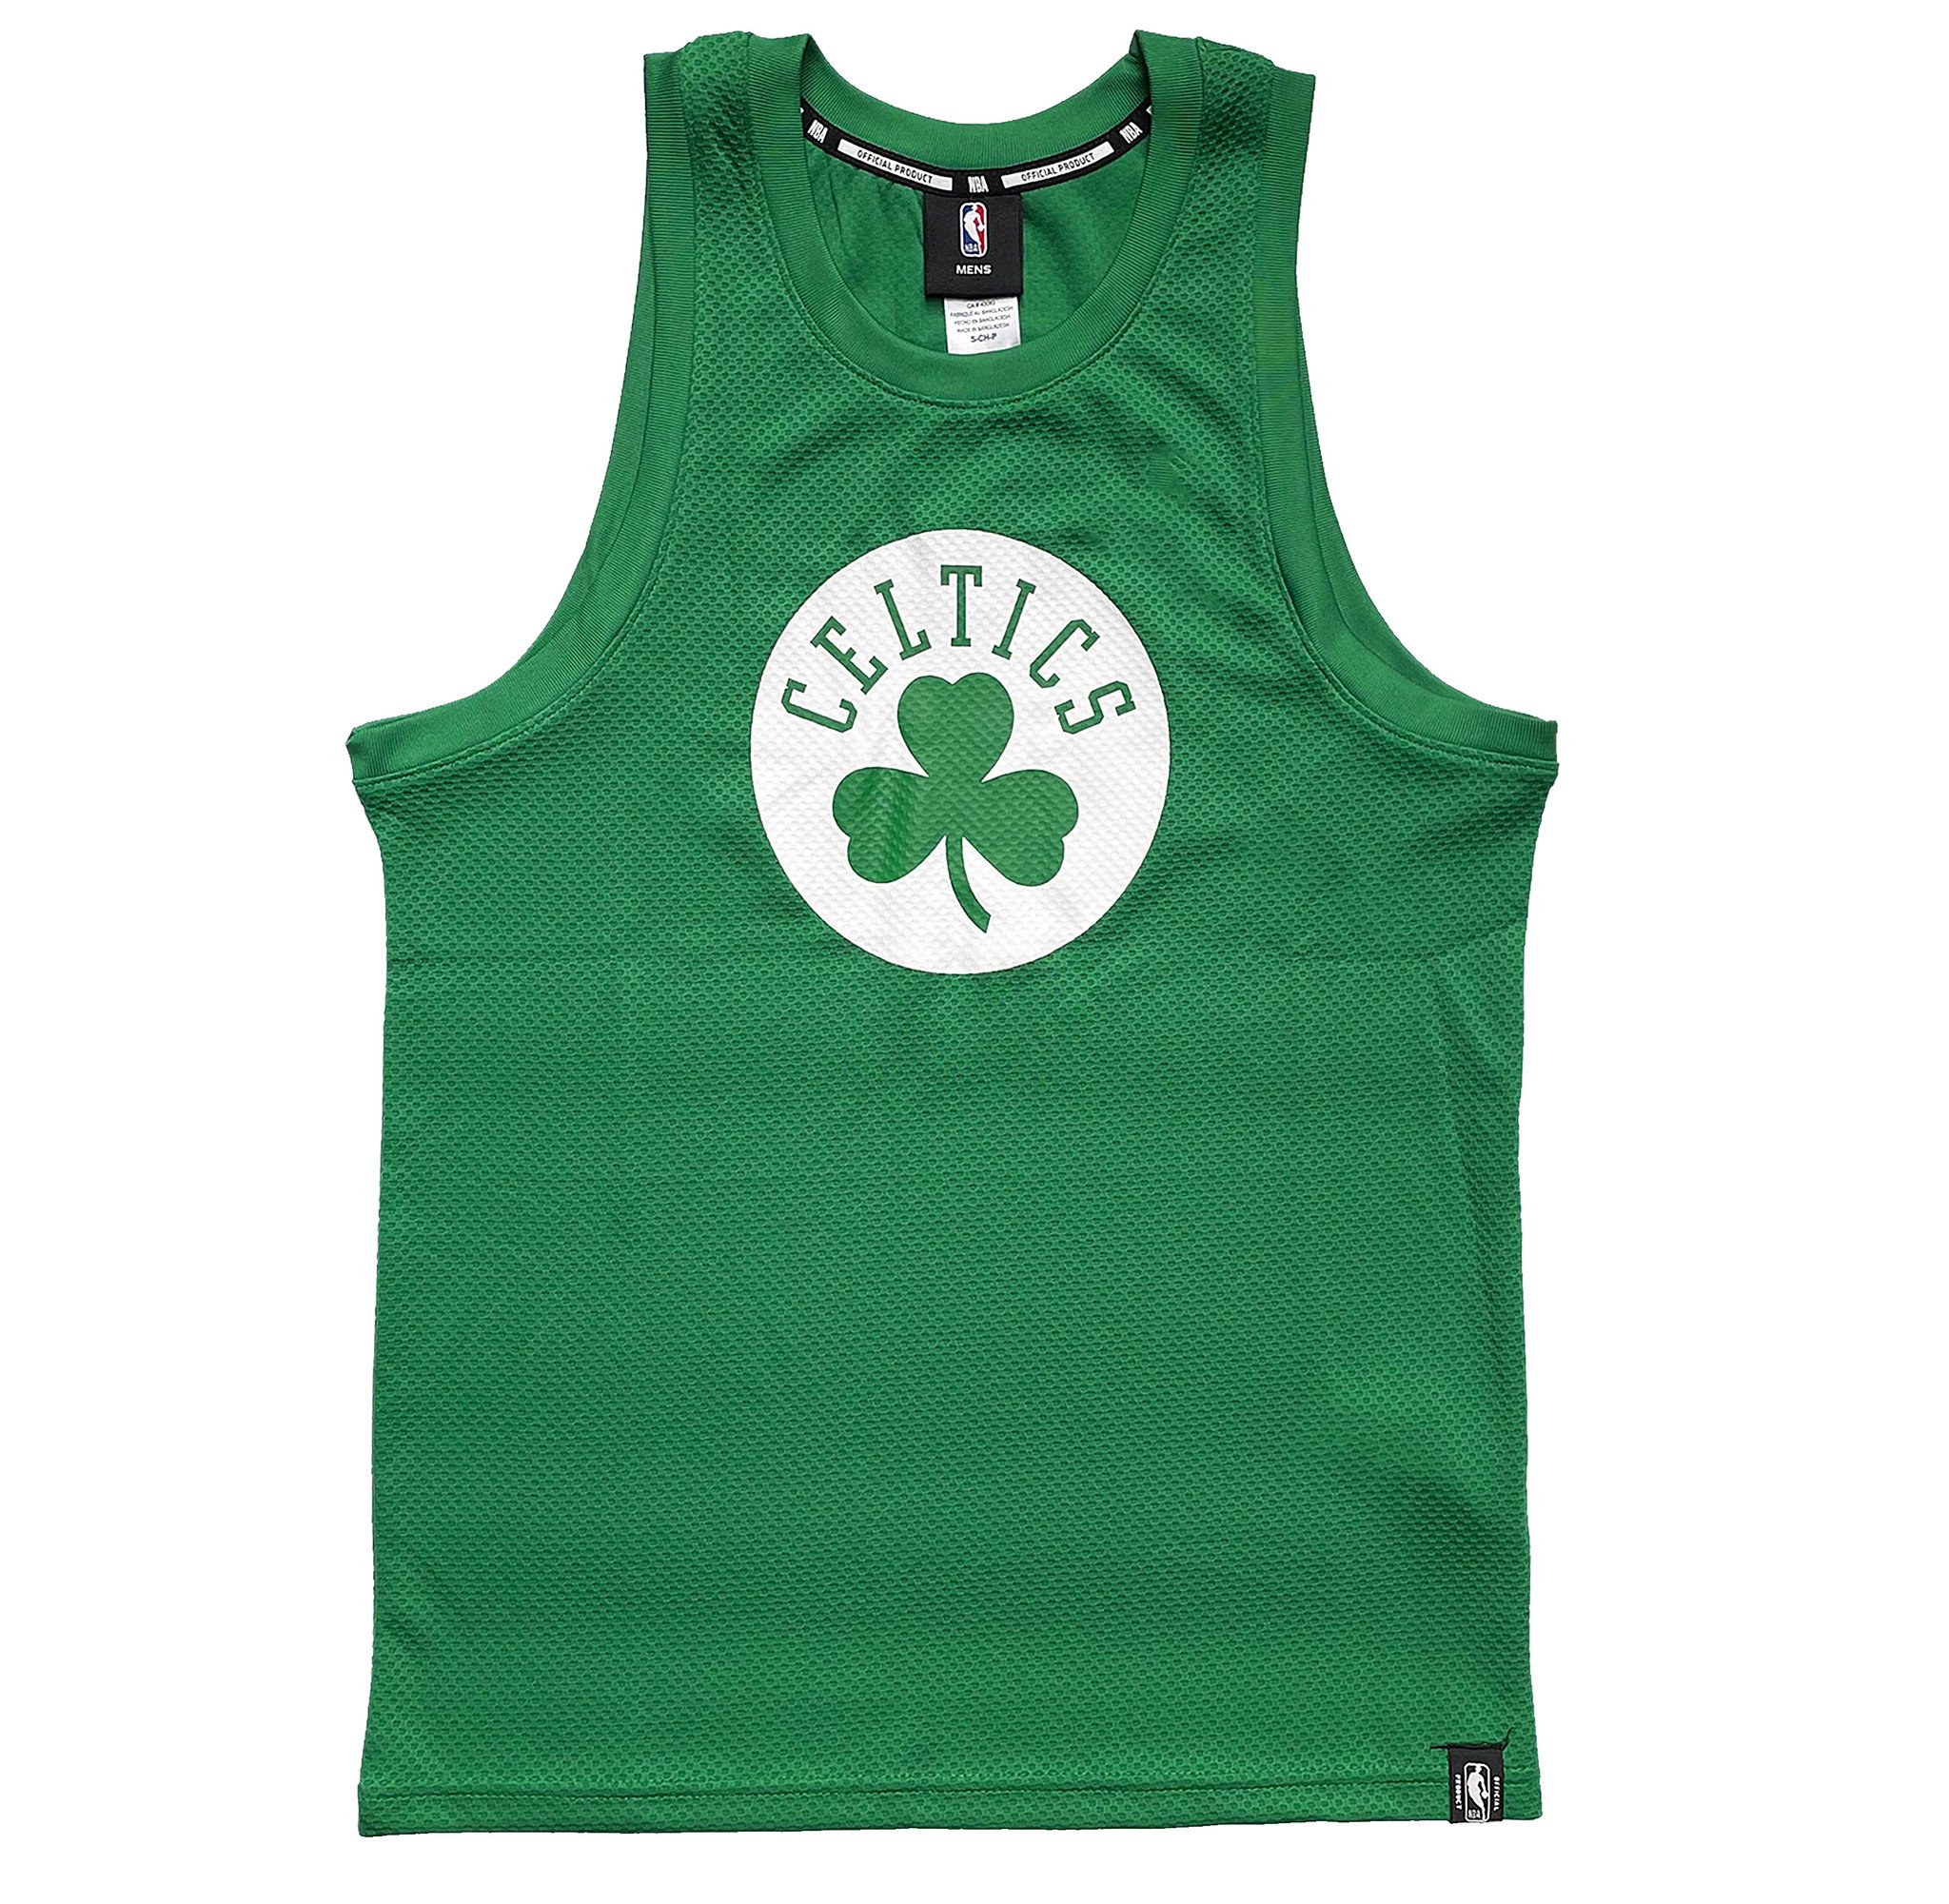 Outerstuff NBA Boston Celtics Jayson Tatum Jersey Groen